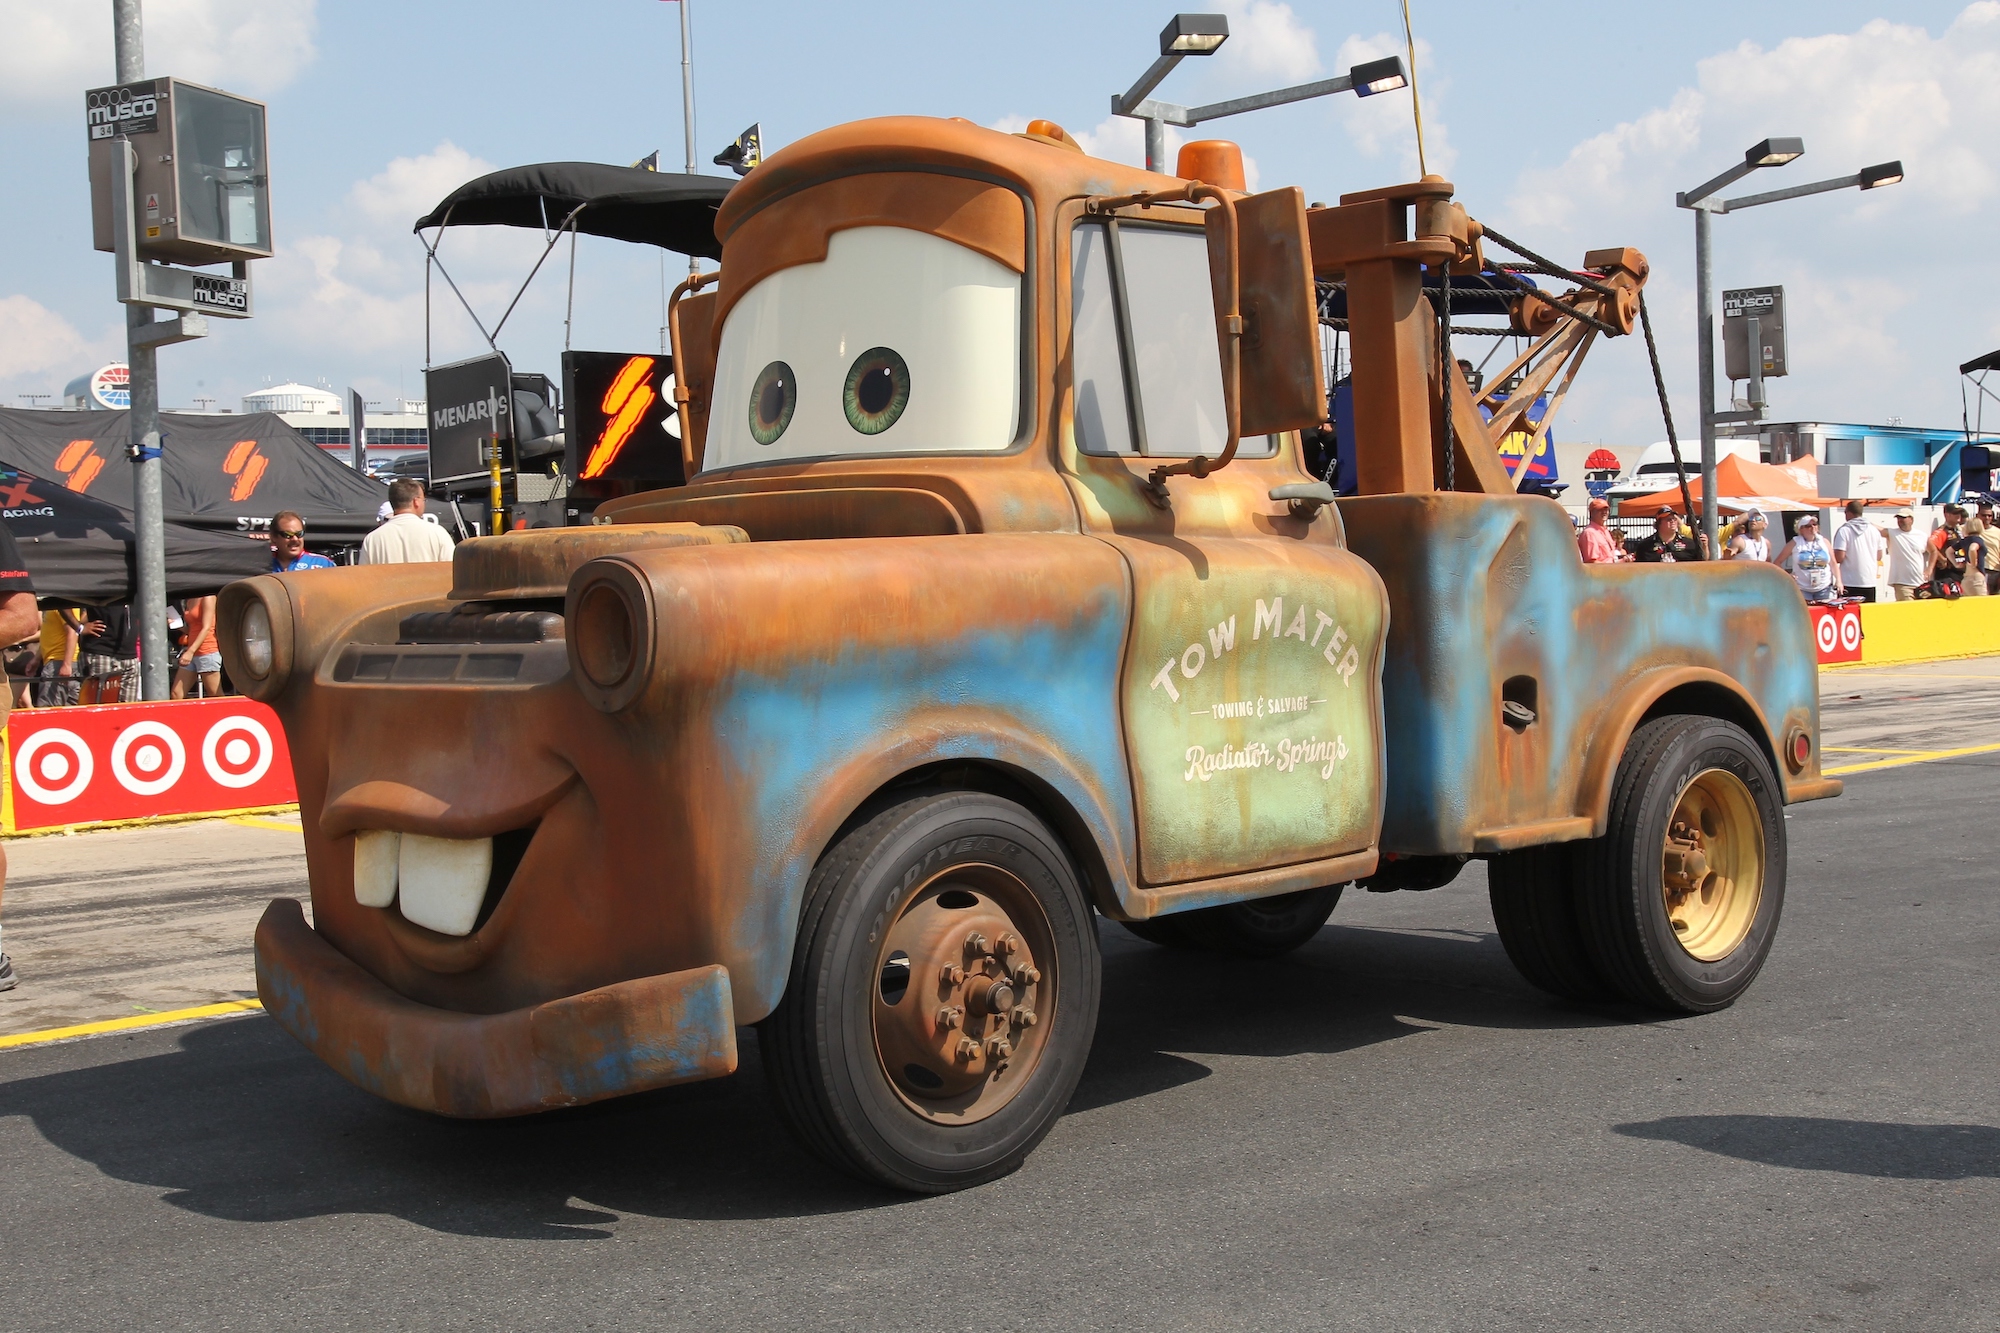 Vertellen Typisch Geneigd zijn What Truck Is Mater Based on From the 'Cars' Movies?